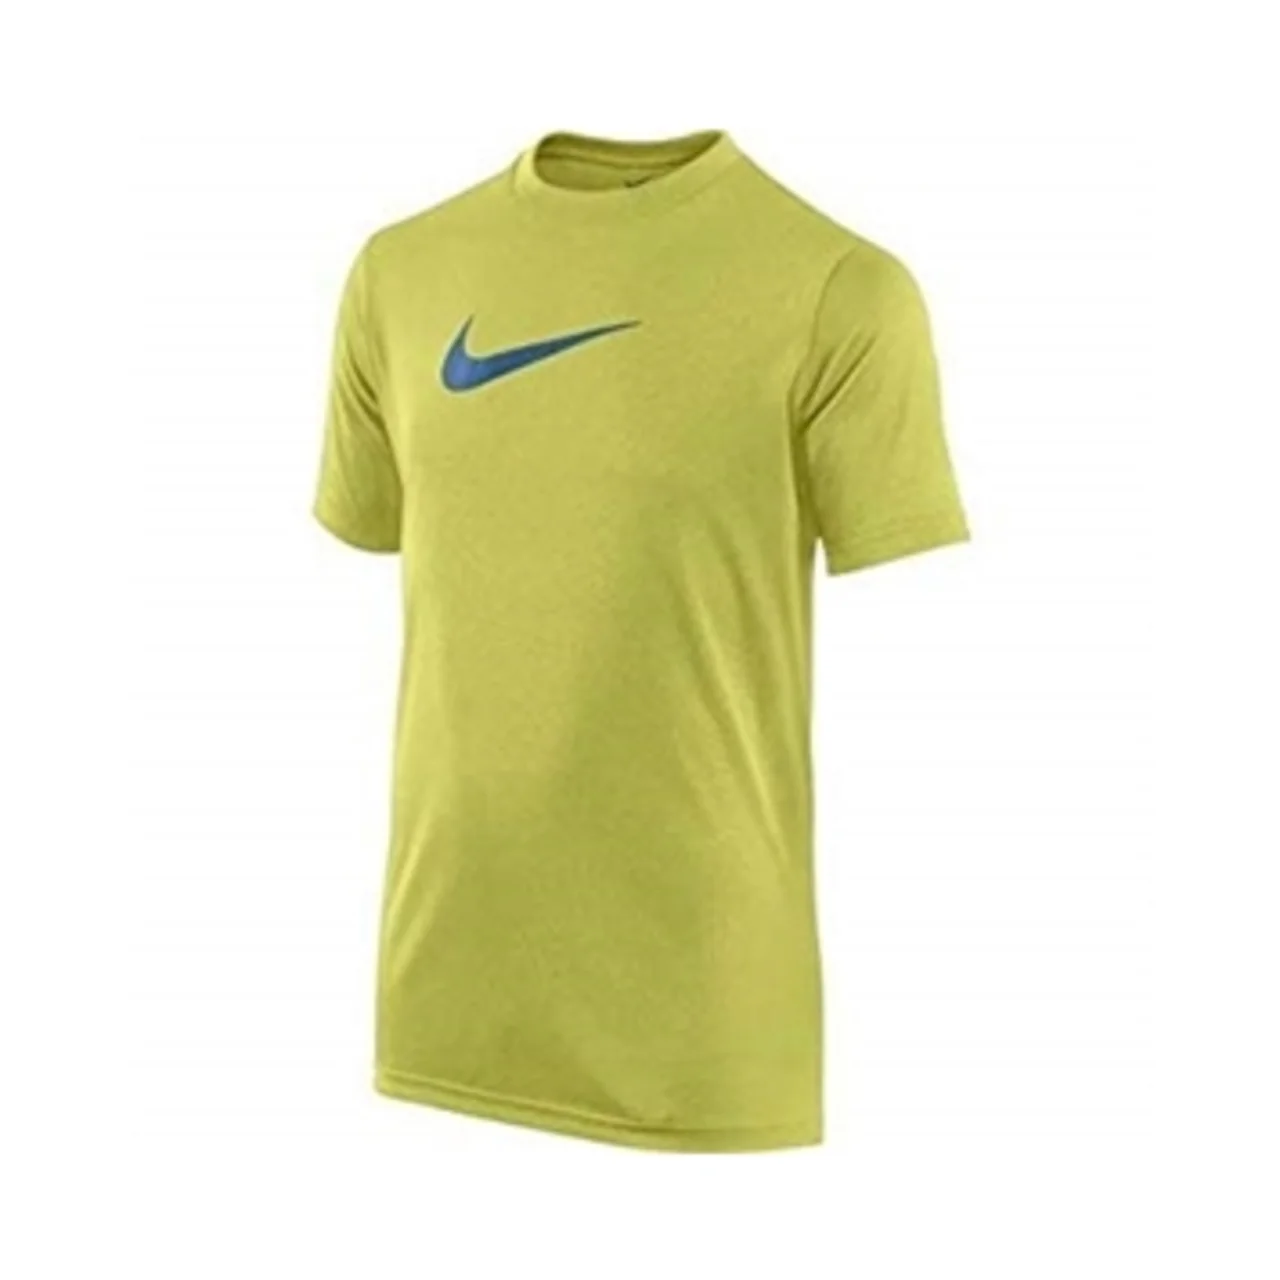 Nike Legend SS Top Boy Green Size 128